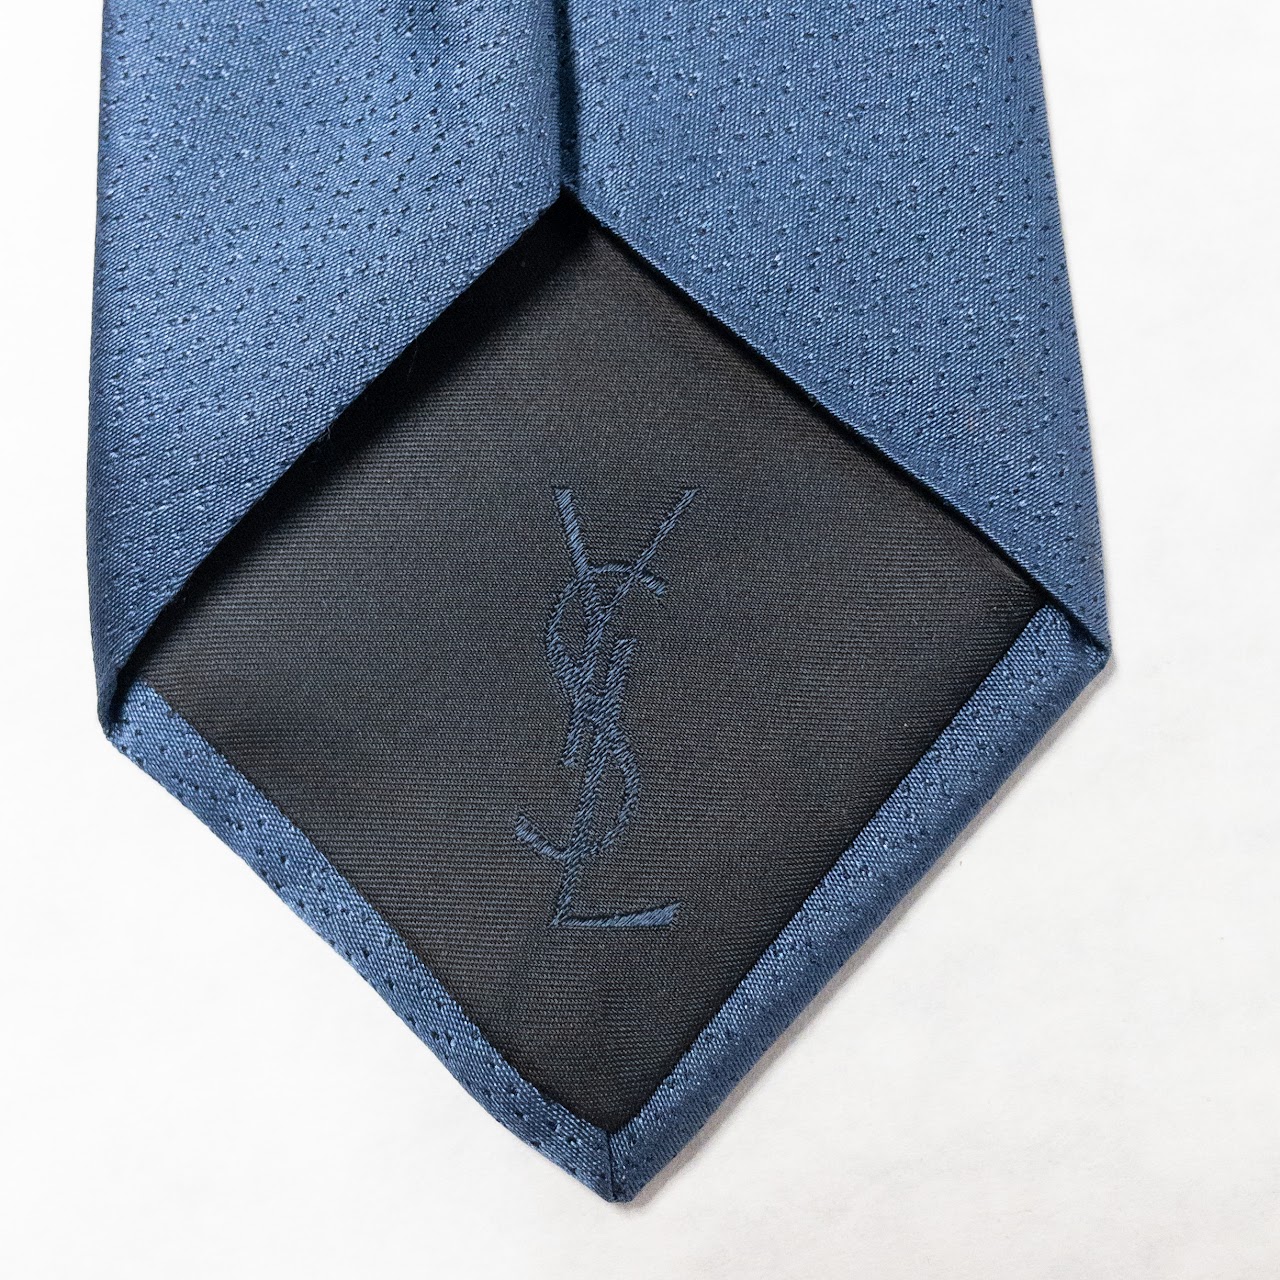 Yves Saint Laurent Blue Silk Tie